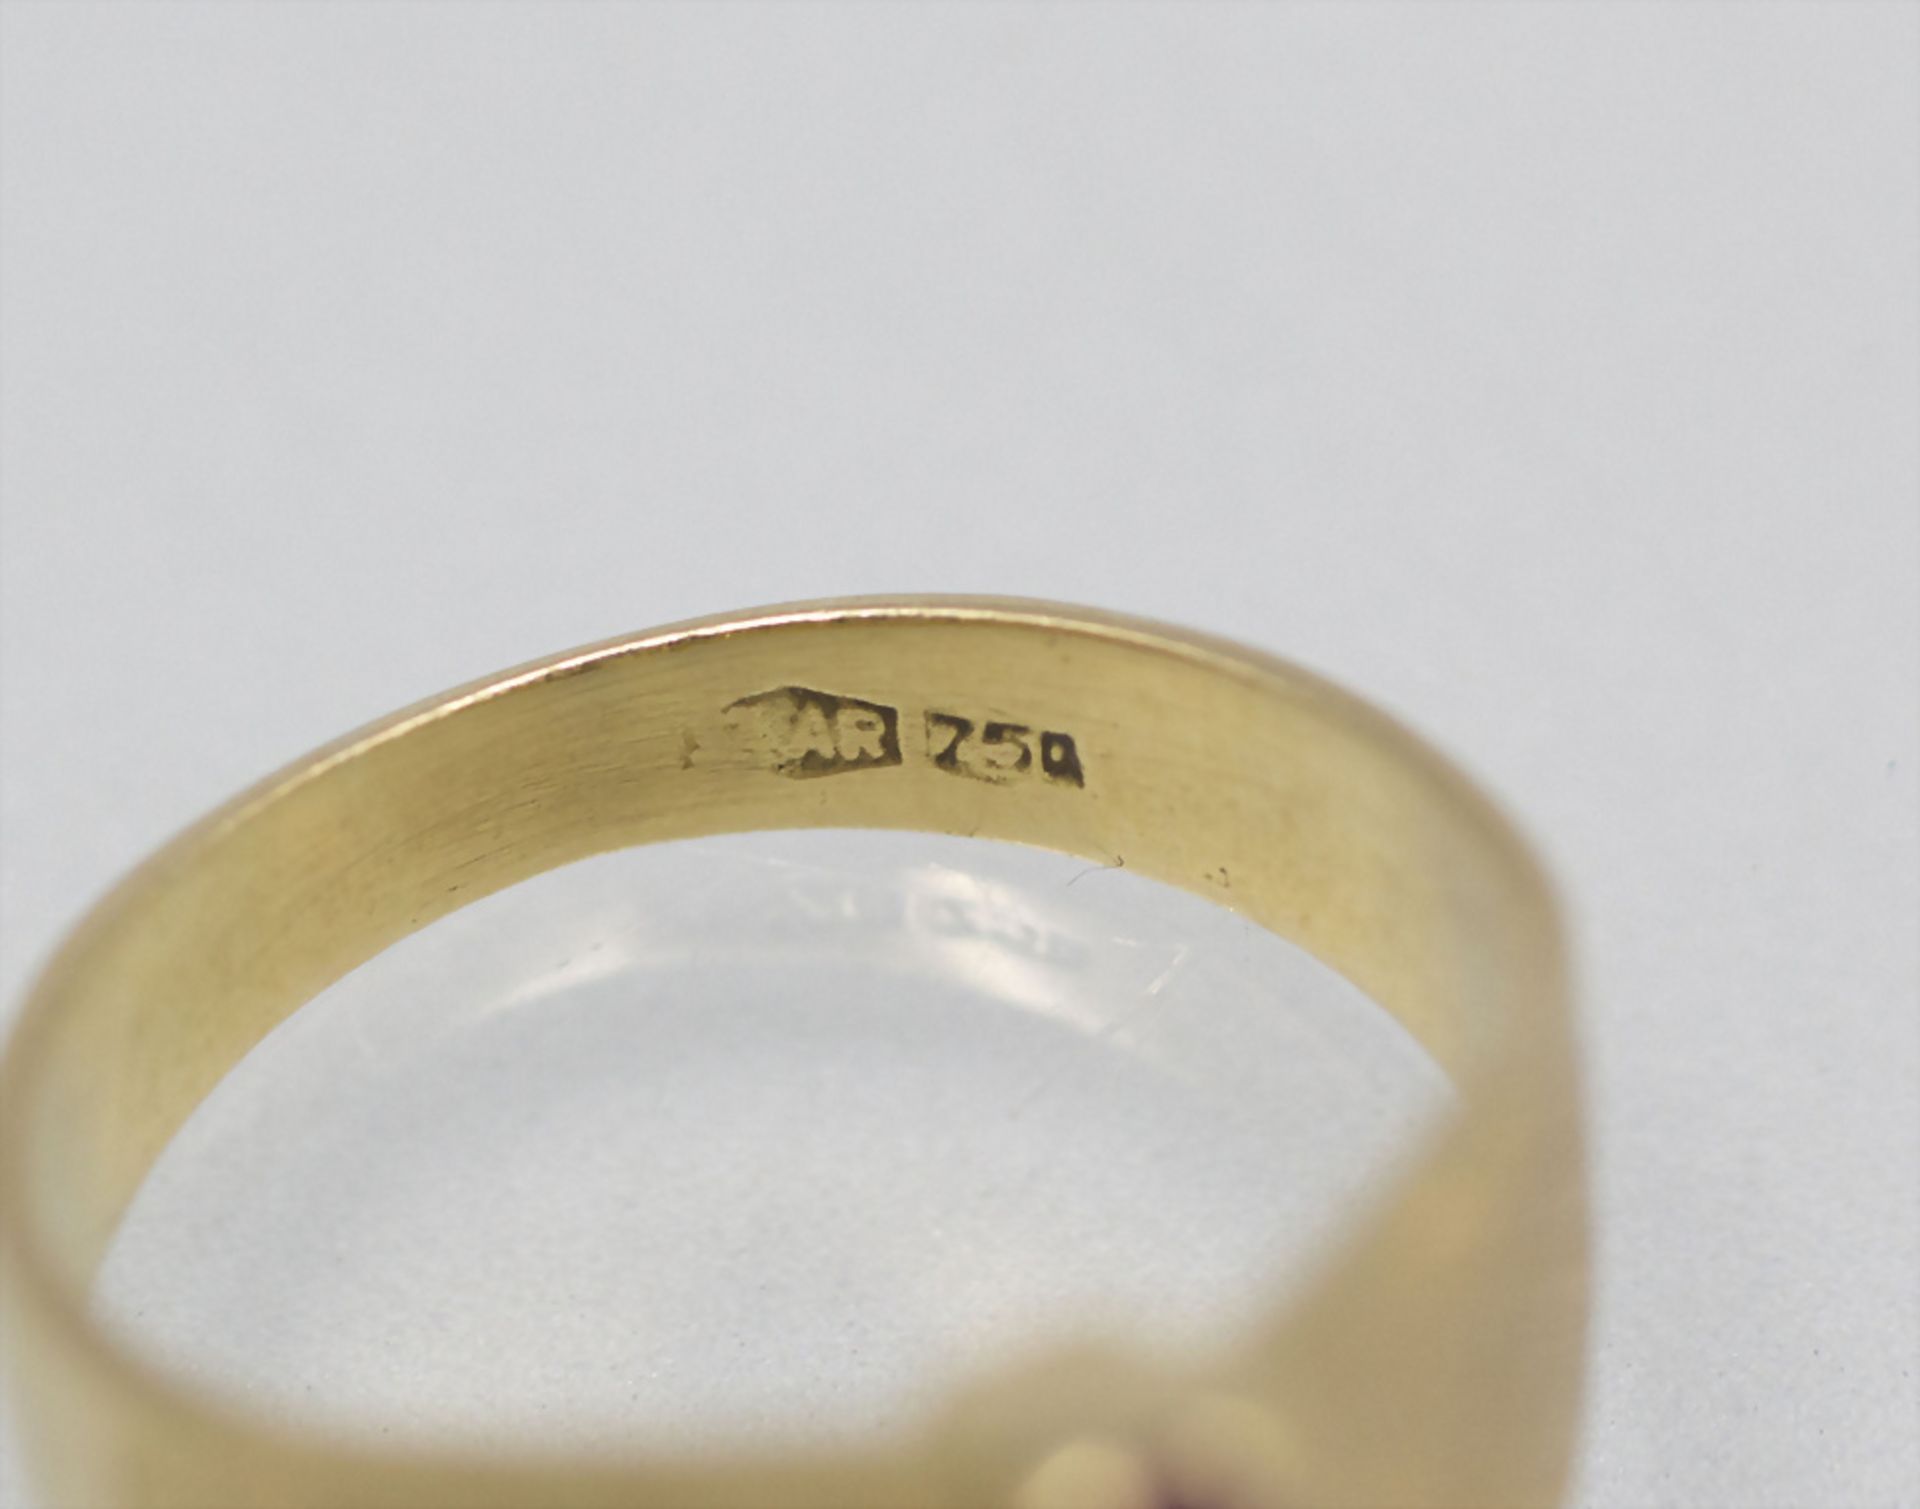 Damenring mit Rubinen / A ladies 18 ct gold ring with rubies, um 1950 - Image 3 of 4